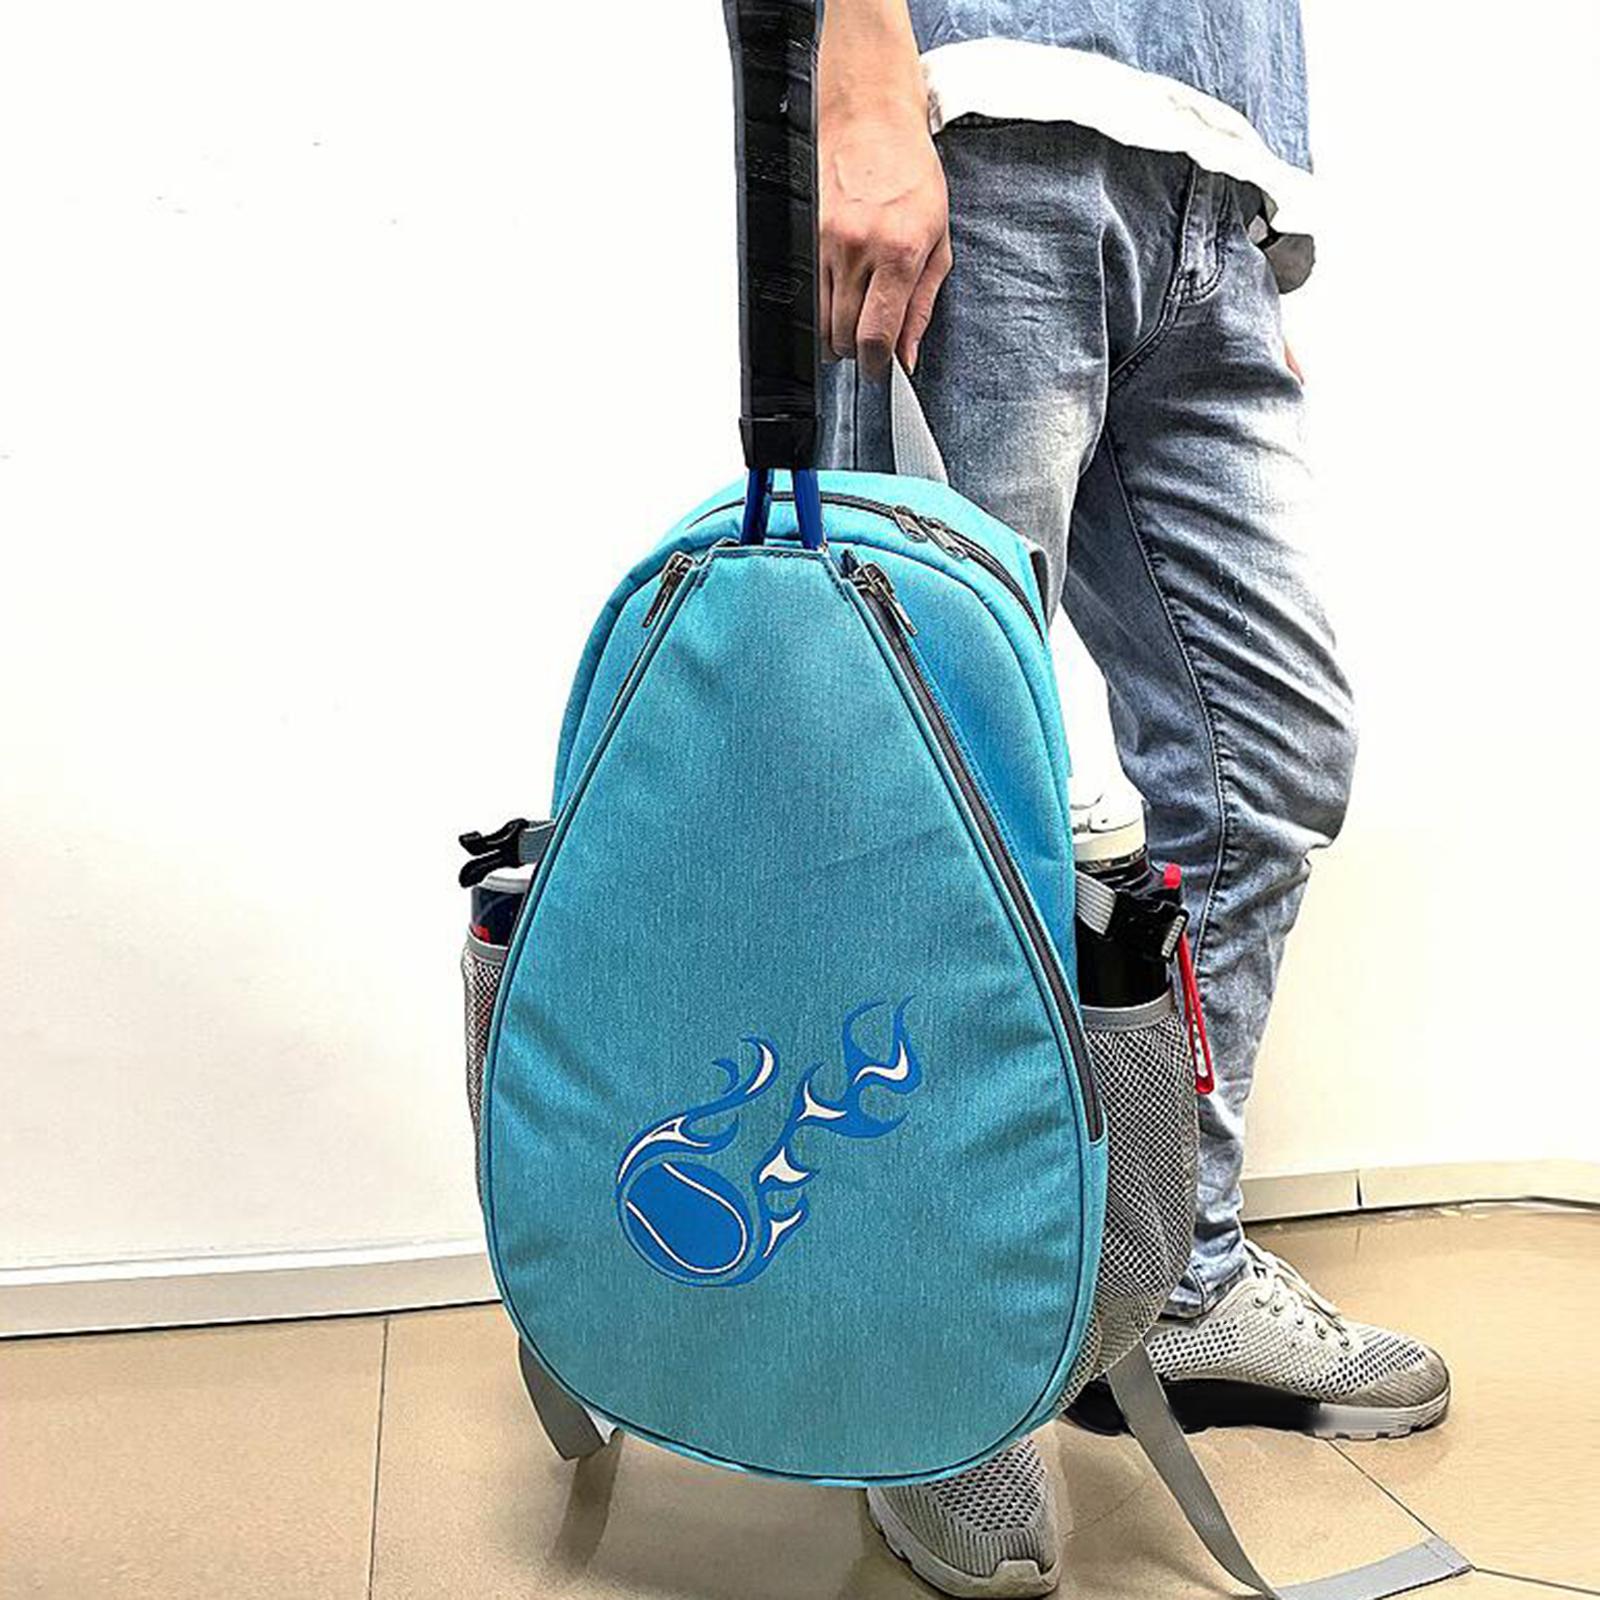 Tennis Backpack Portable Tennis Bag for Tennis Racket, Badminton Racquet Blue